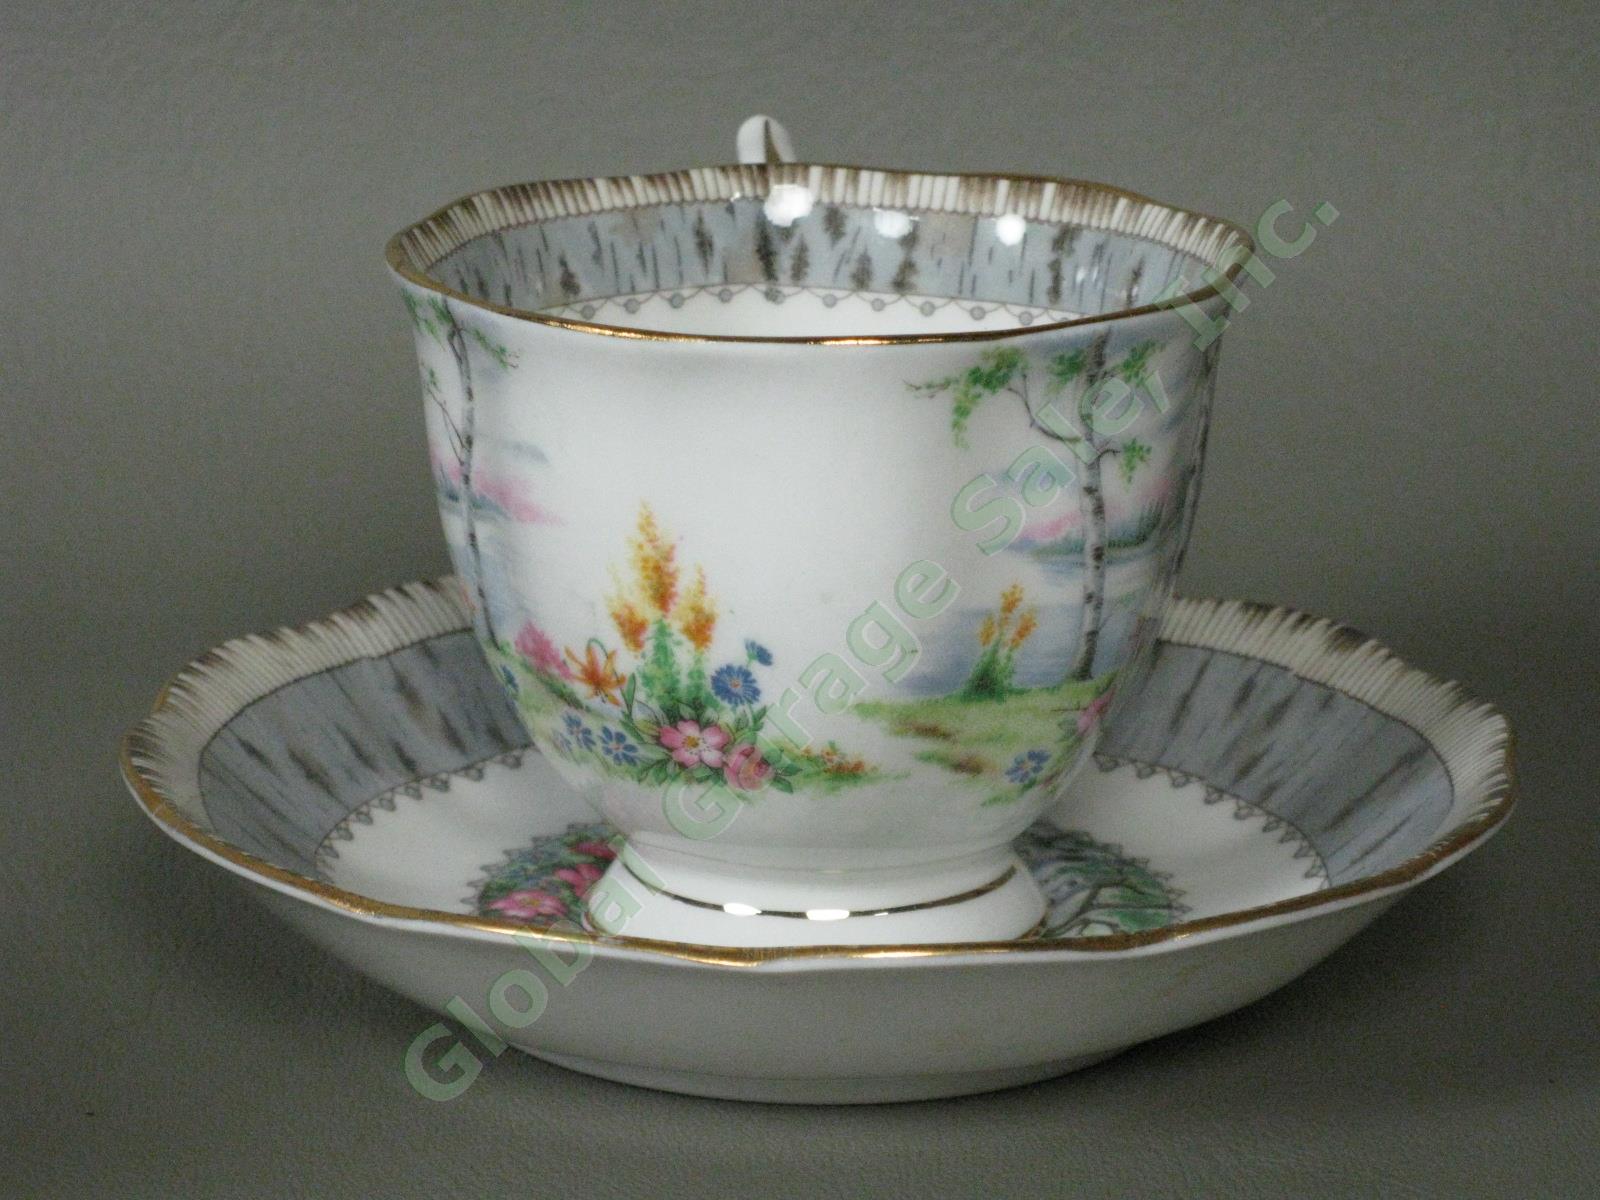 8 Vintage Royal Albert Silver Birch Bone China Teacups Tea Cups + Saucers Set NR 2